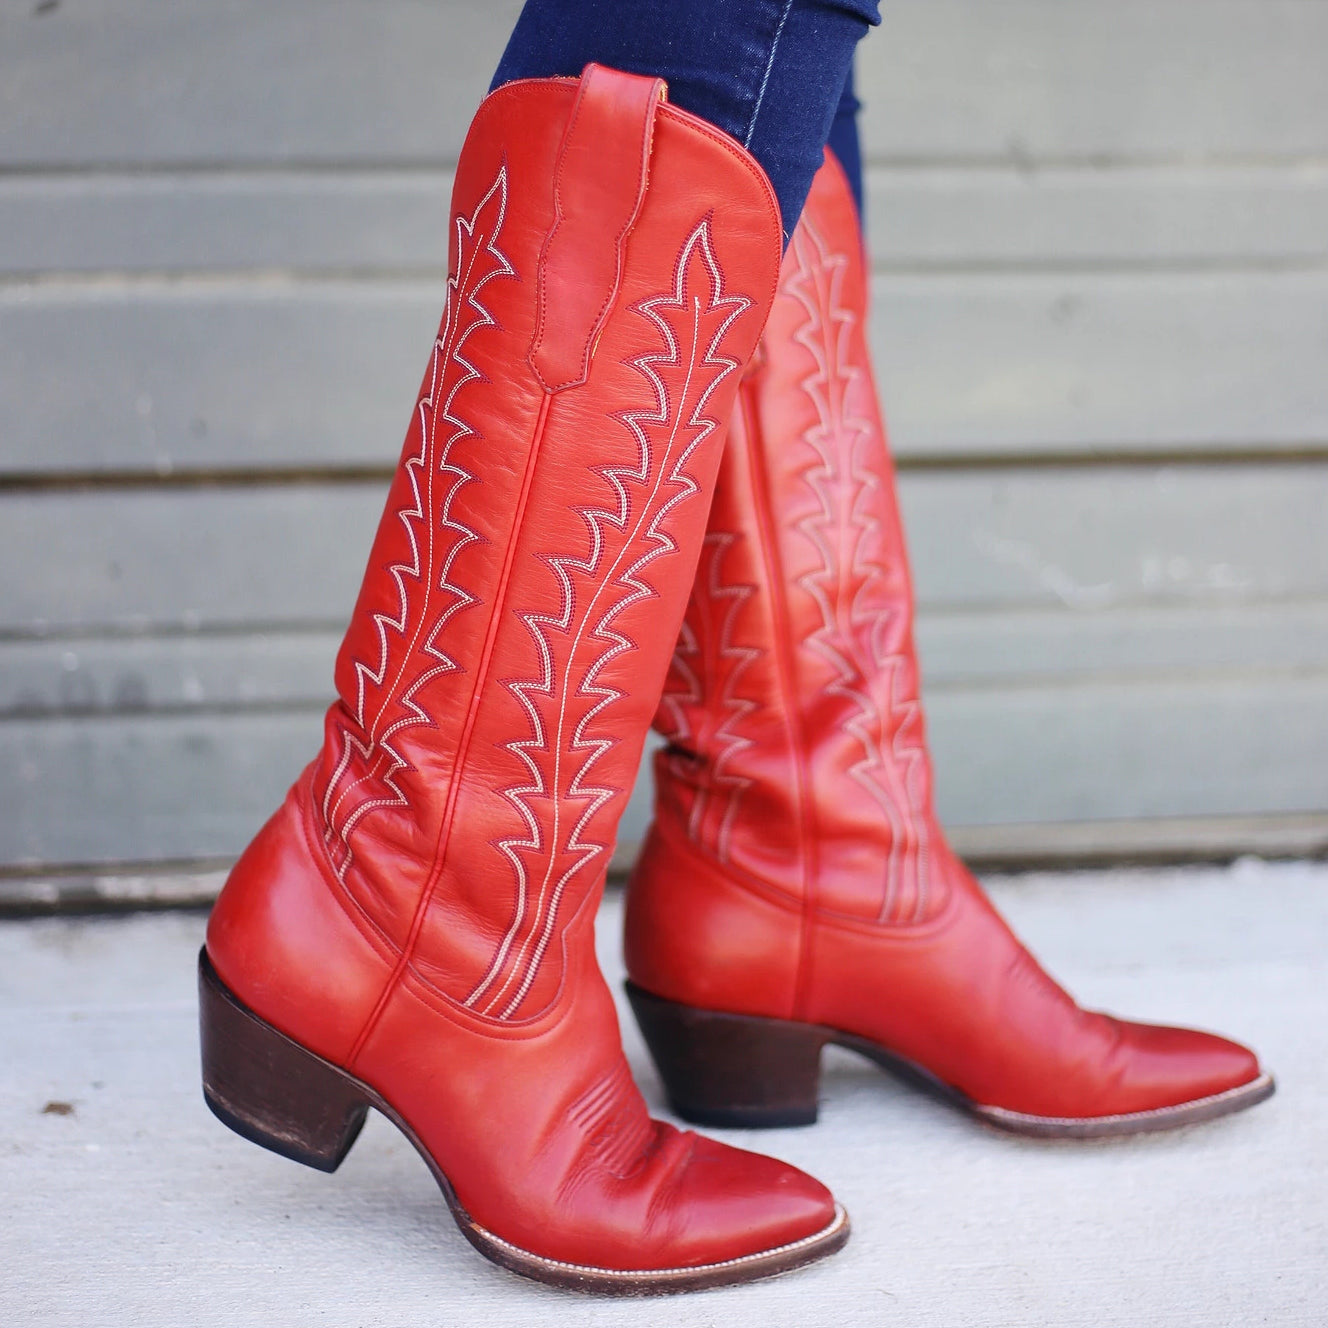 Glamorous western boots in dark red